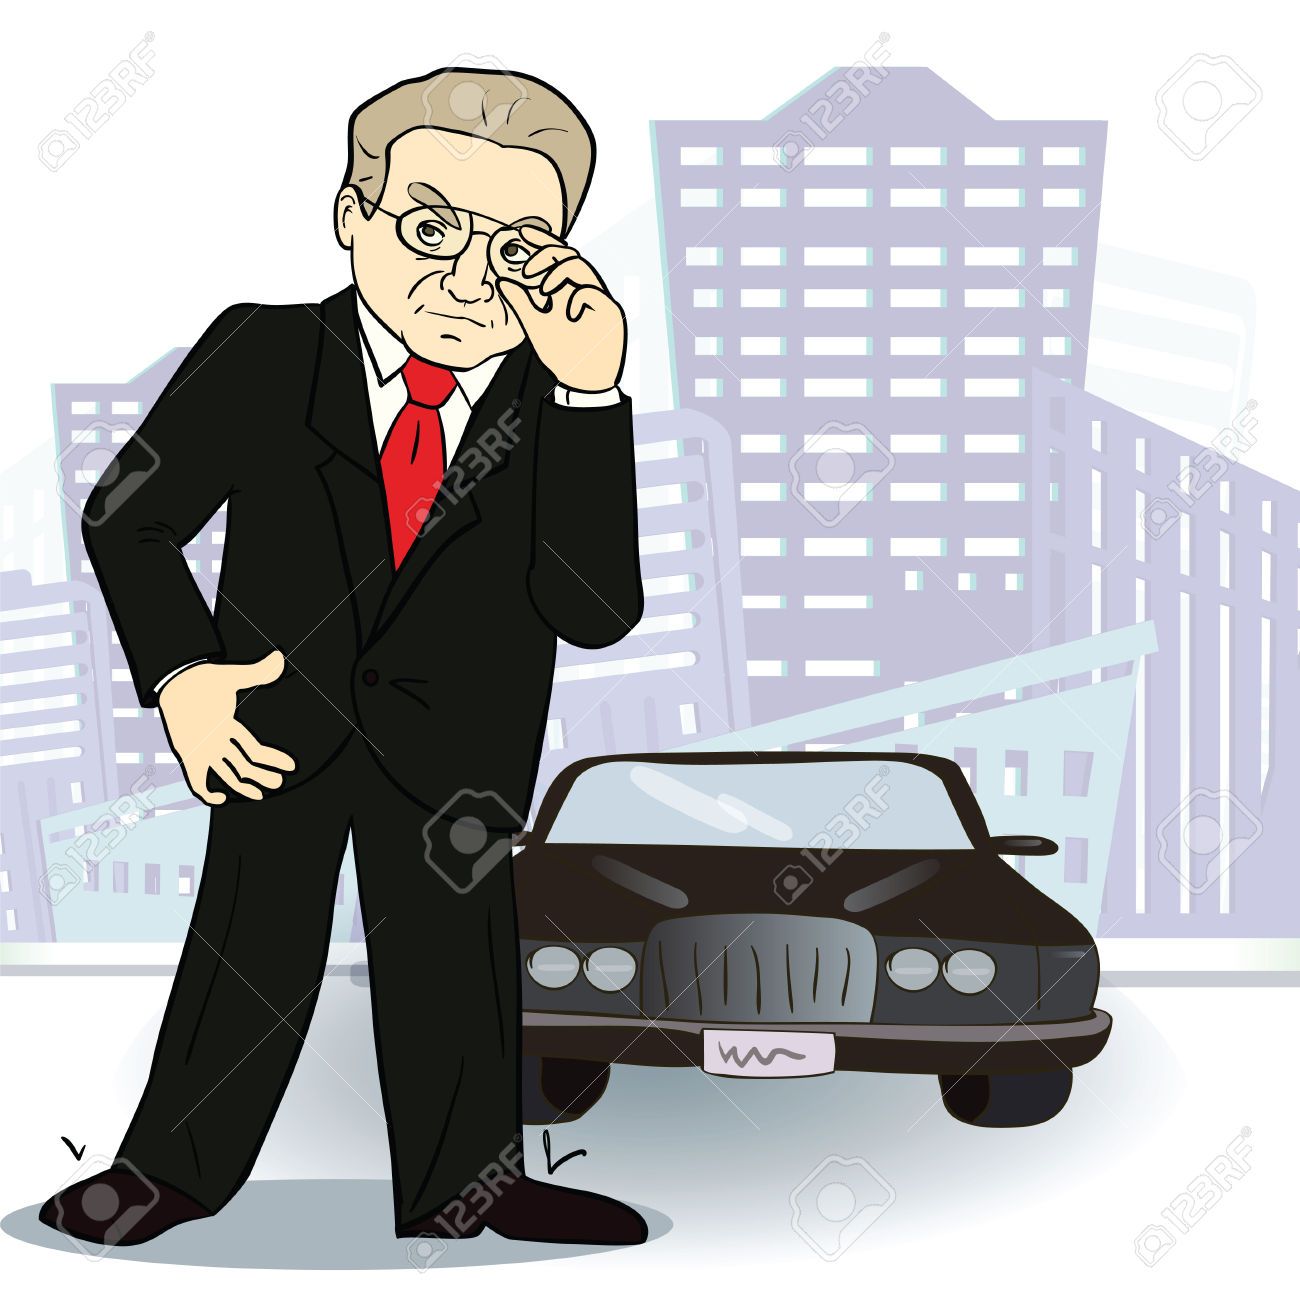 38674048-Businessman-and-car-Rich-man-in-the-city-Vector-Cartoon-image-Stock-Vector.jpg